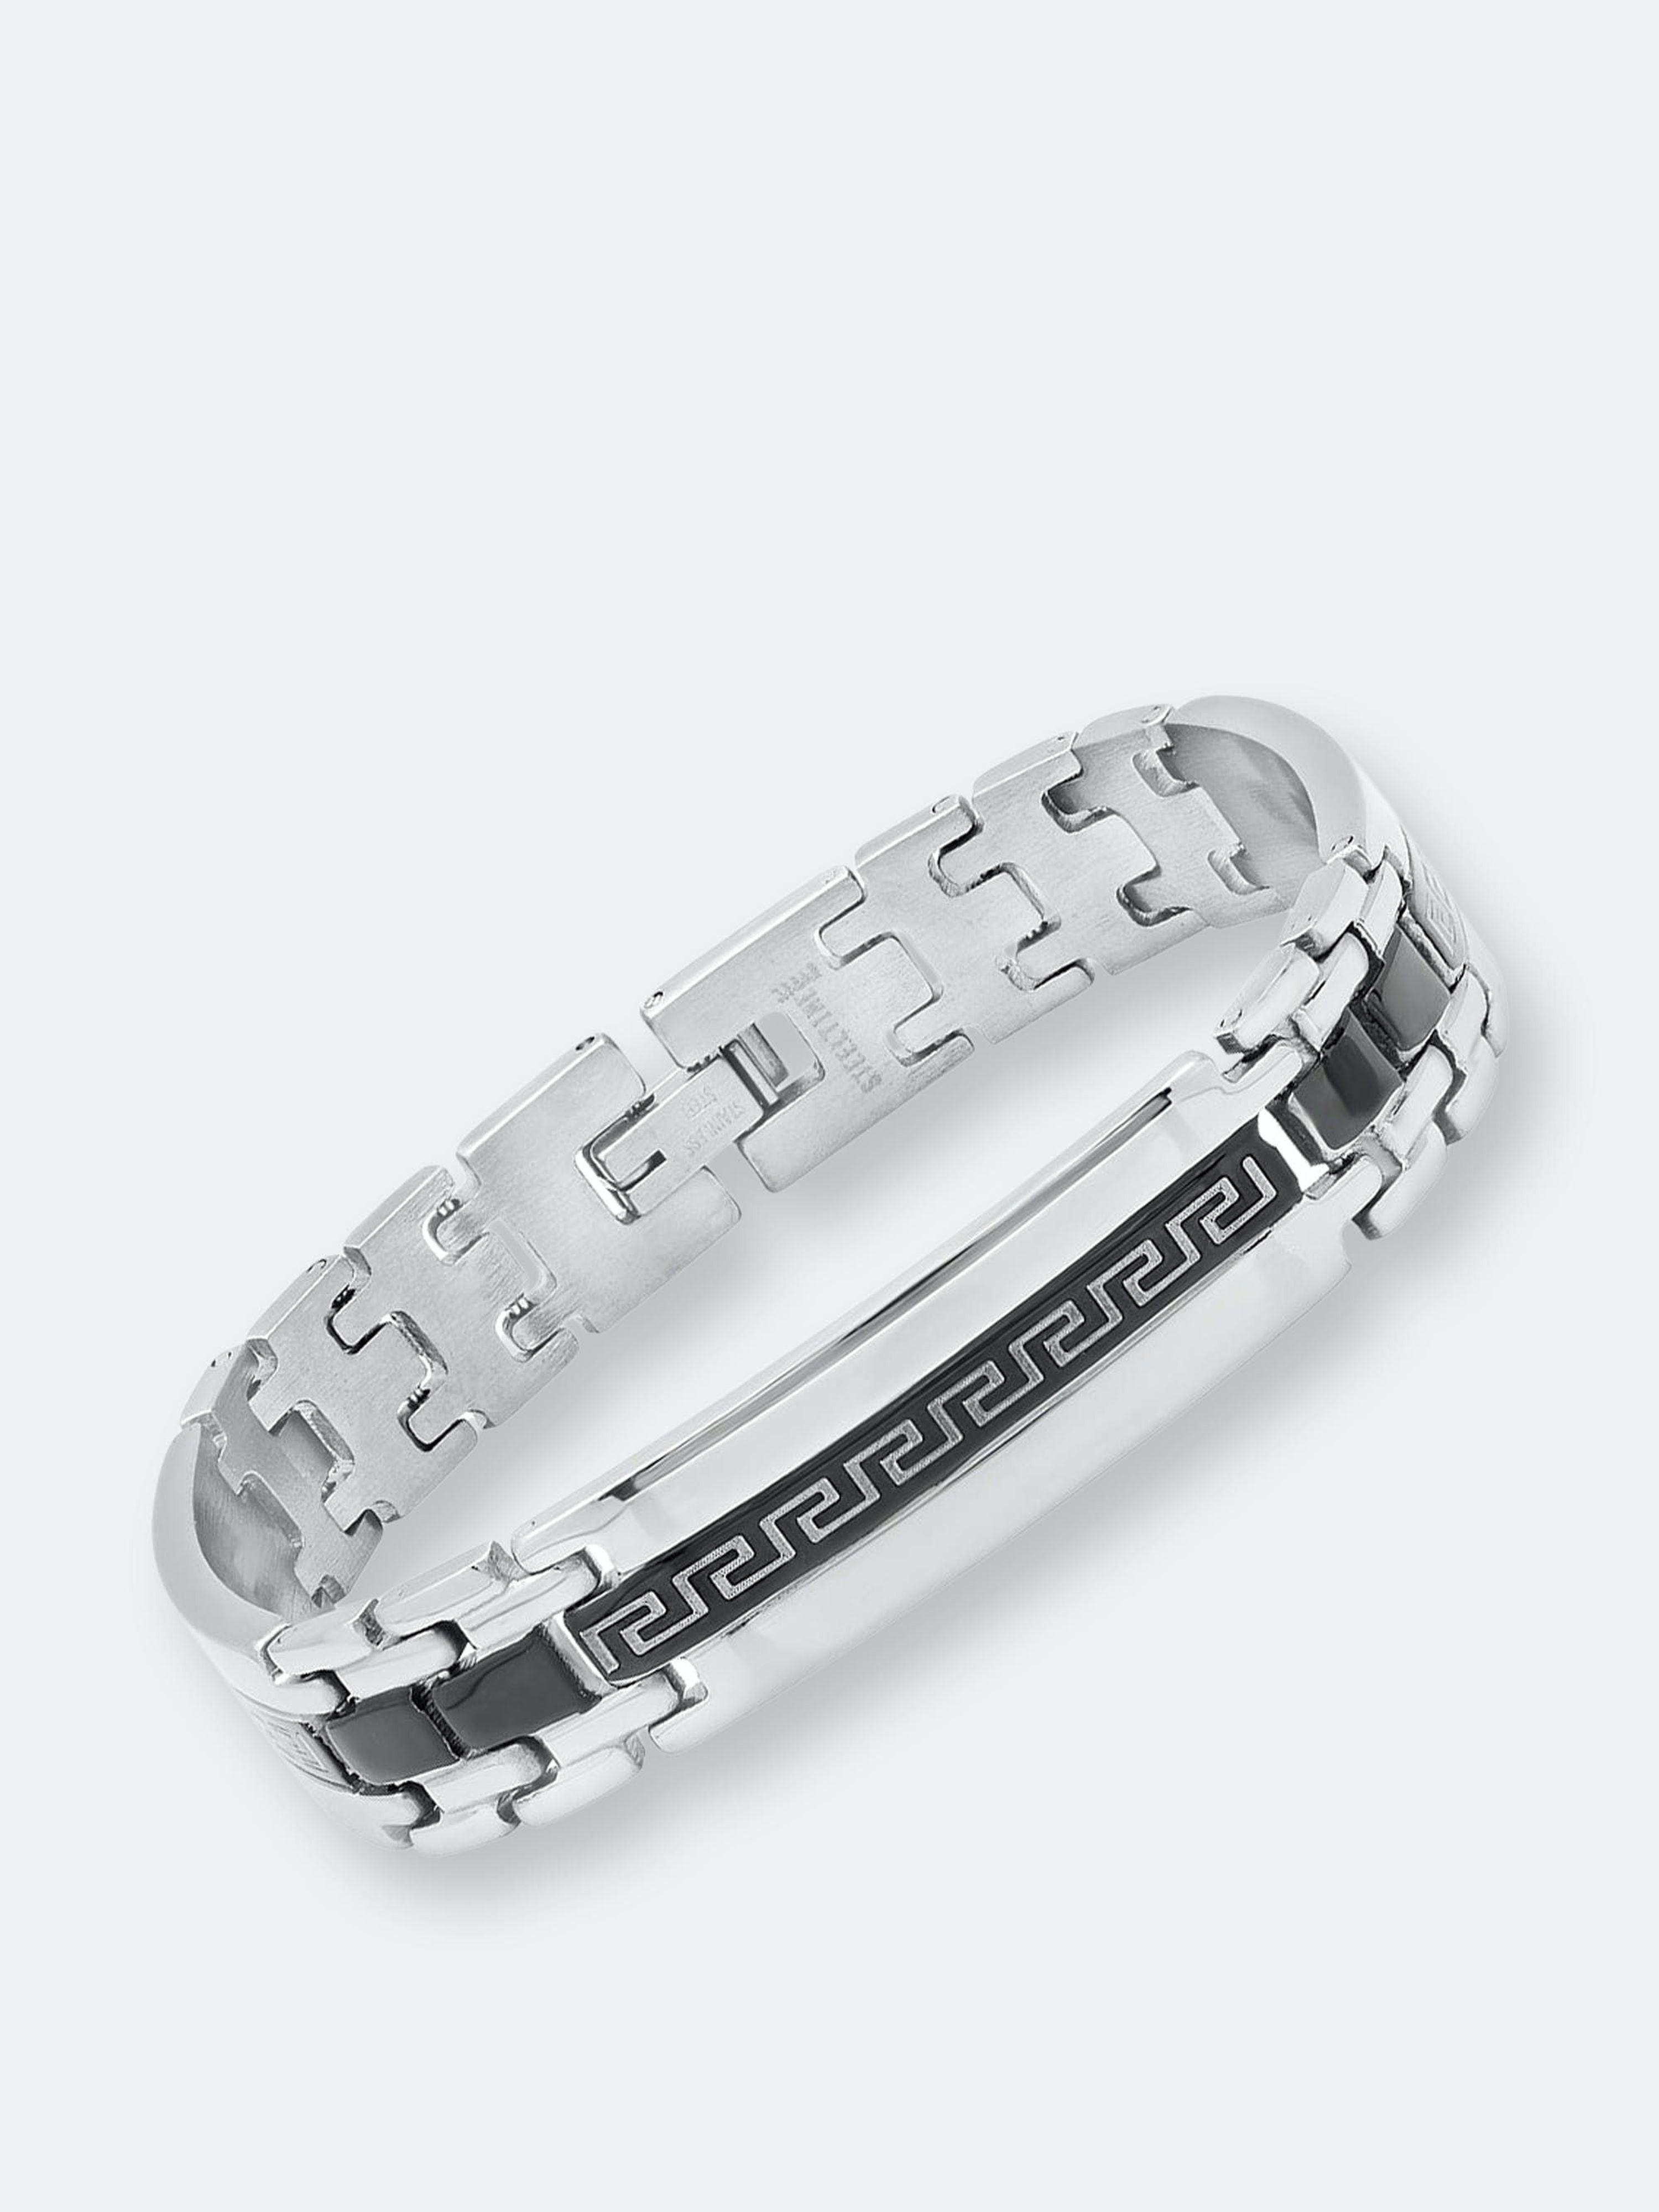 Steeltime Men's Leather String Design Bracelet